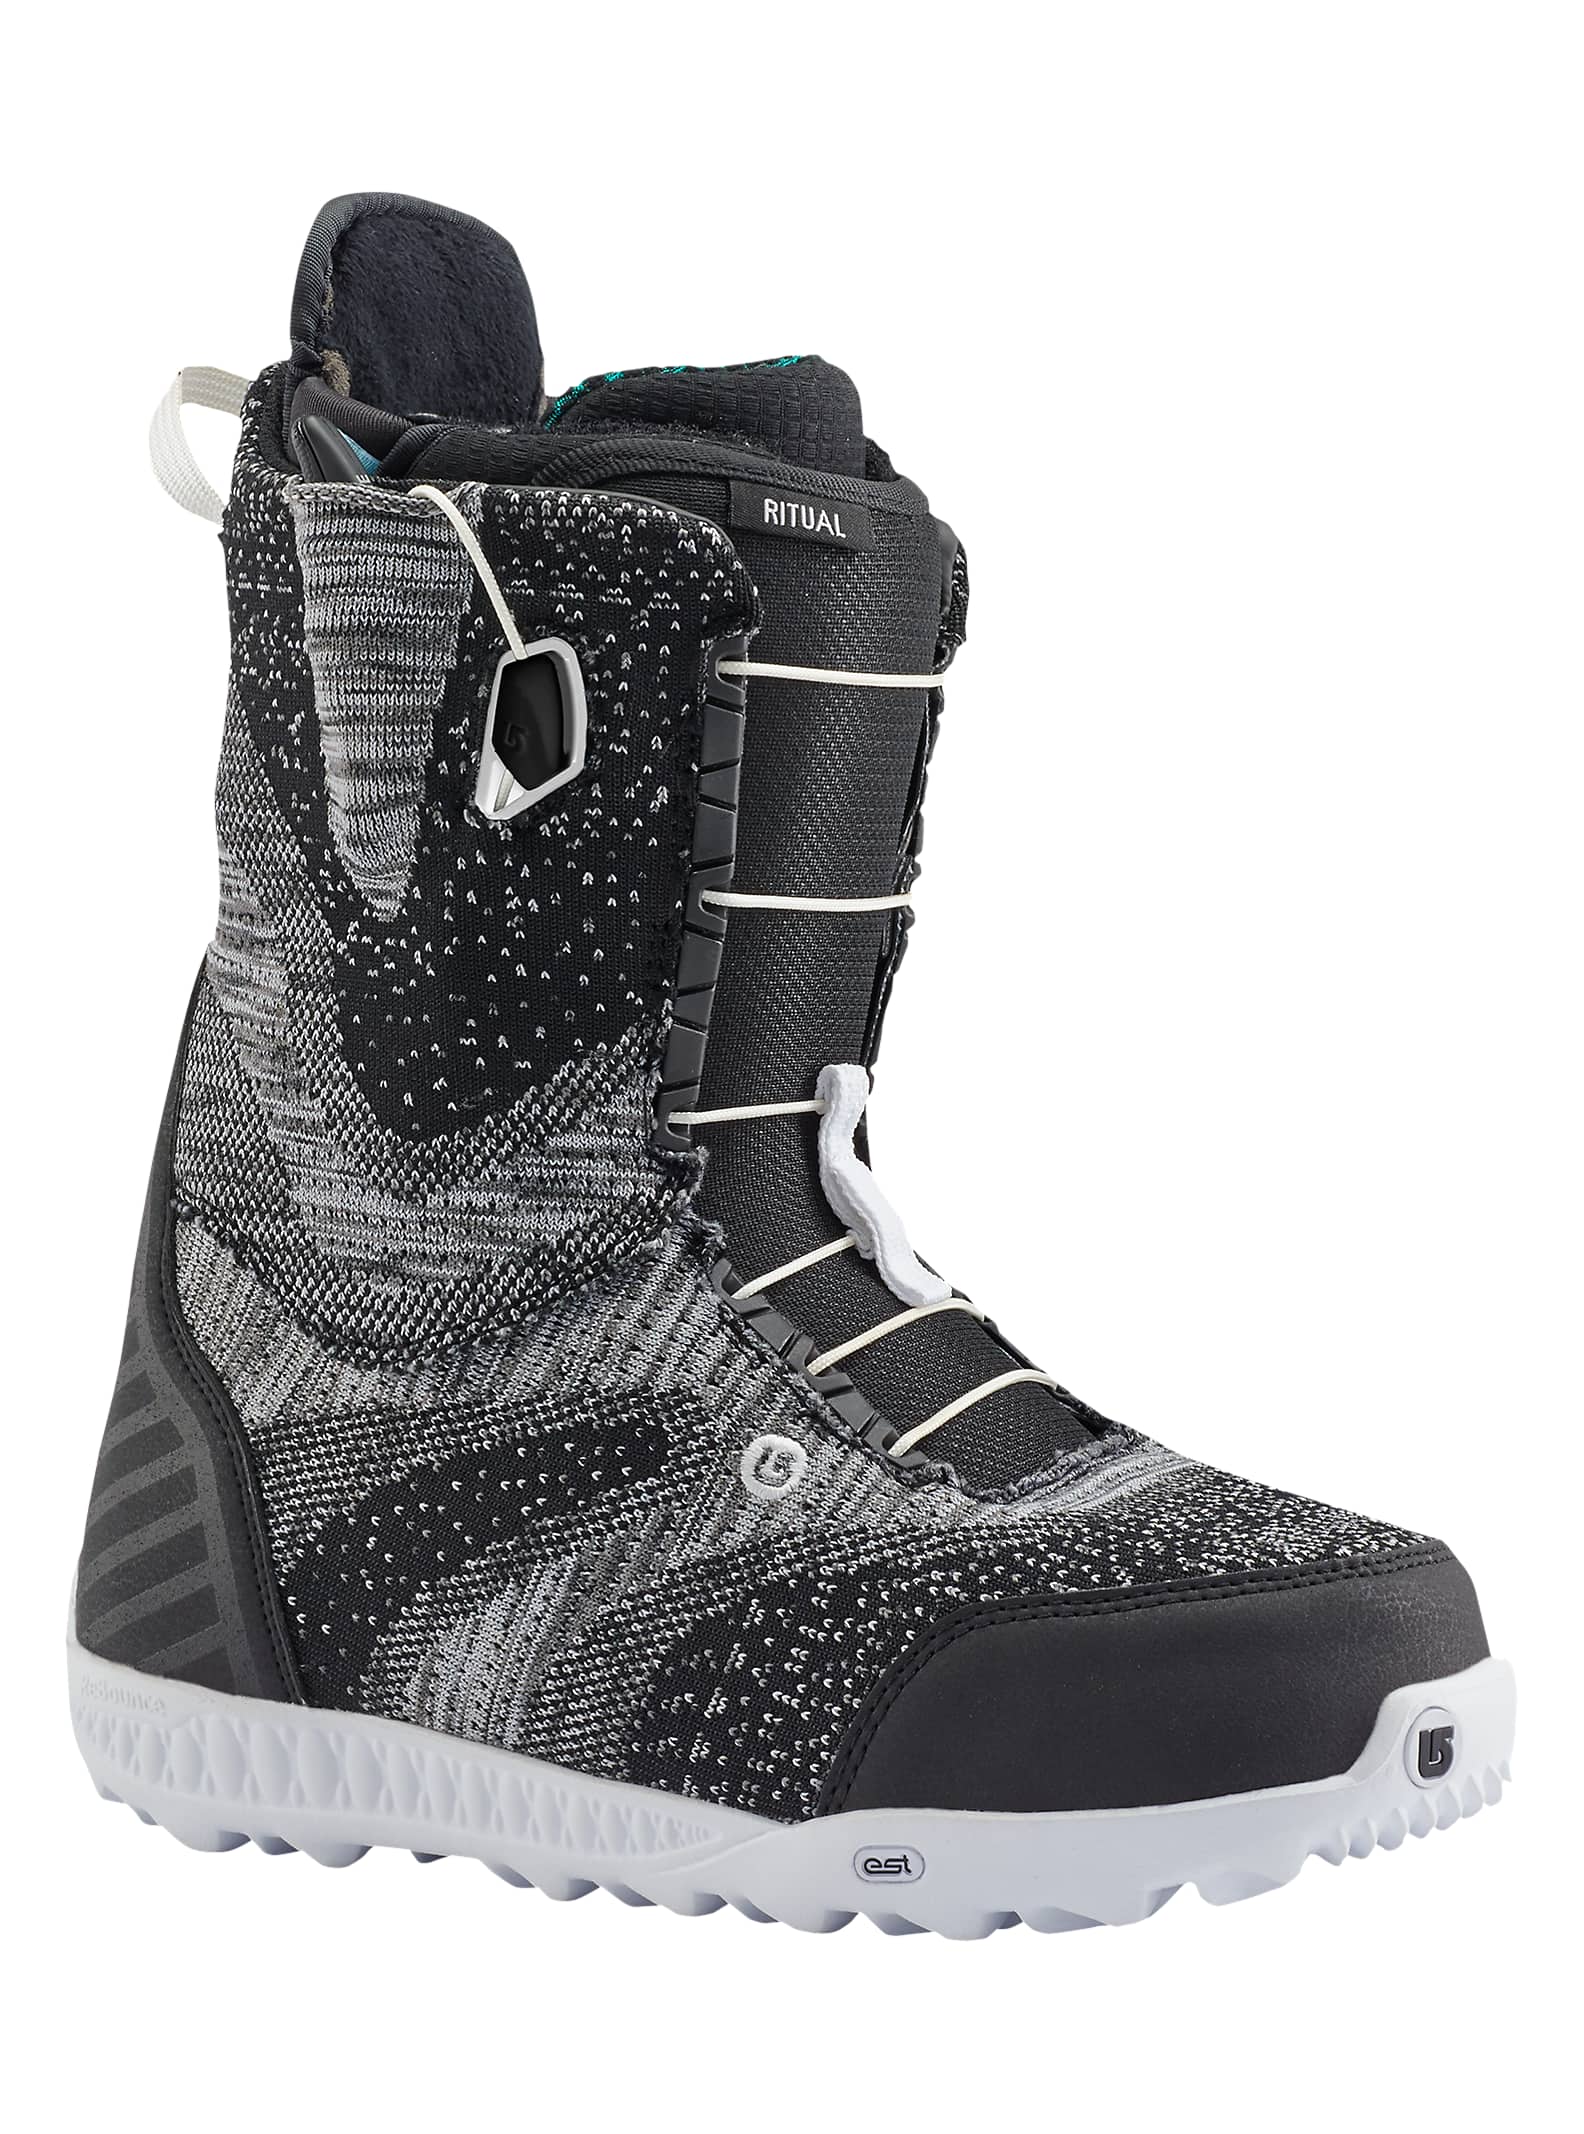 Burton - Boots de snowboard Ritual LTD, Black / Multi, 11